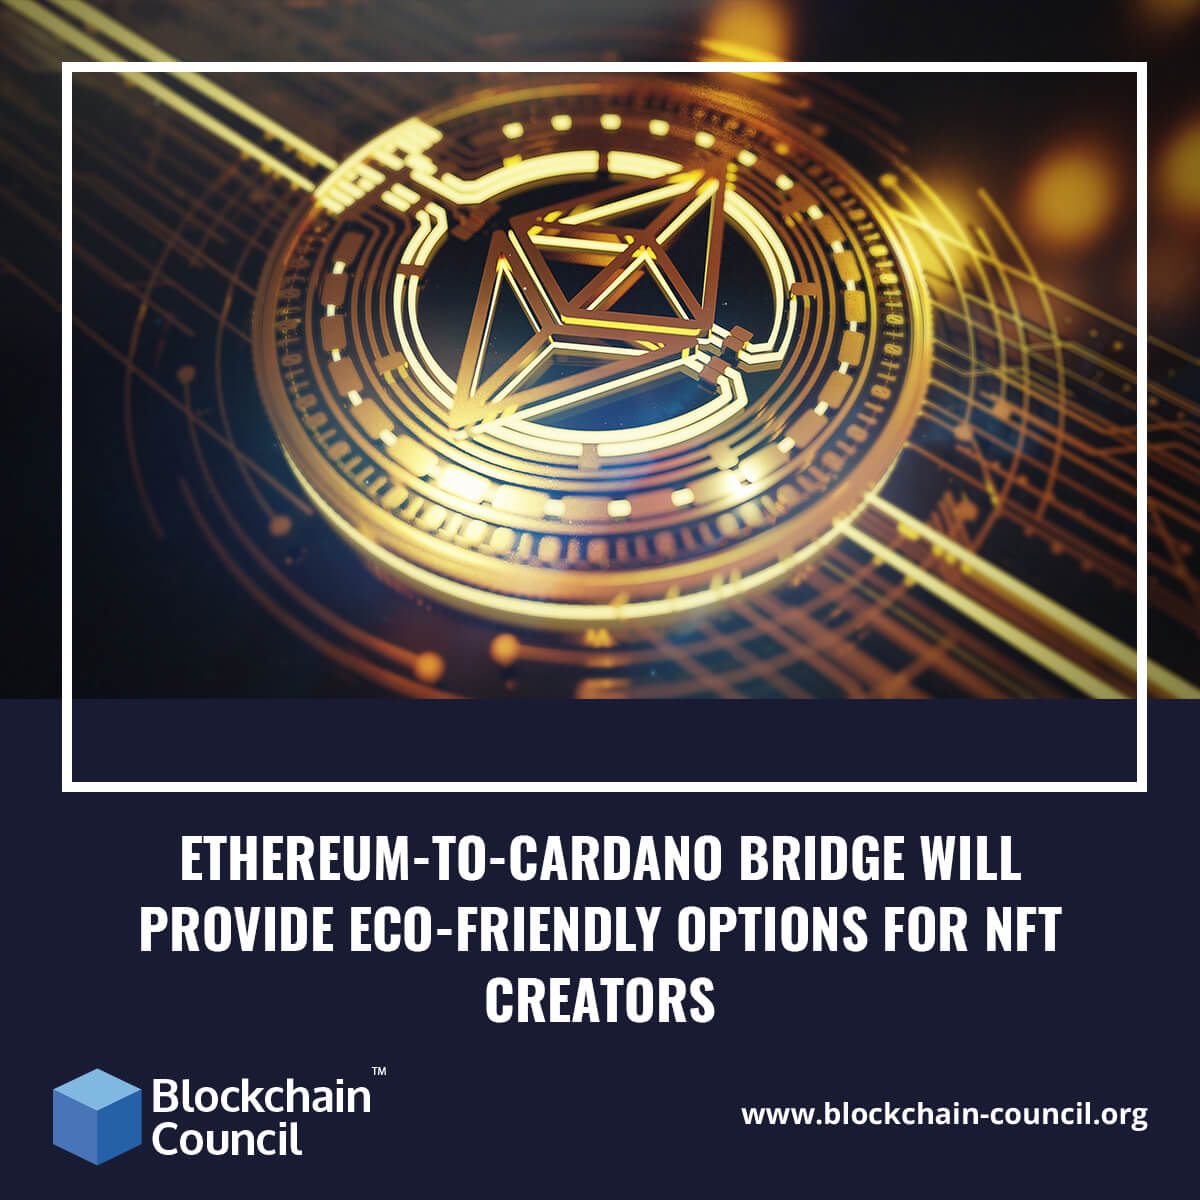 Ethereum-to-Cardano bridge will provide eco-friendly options for NFT creators